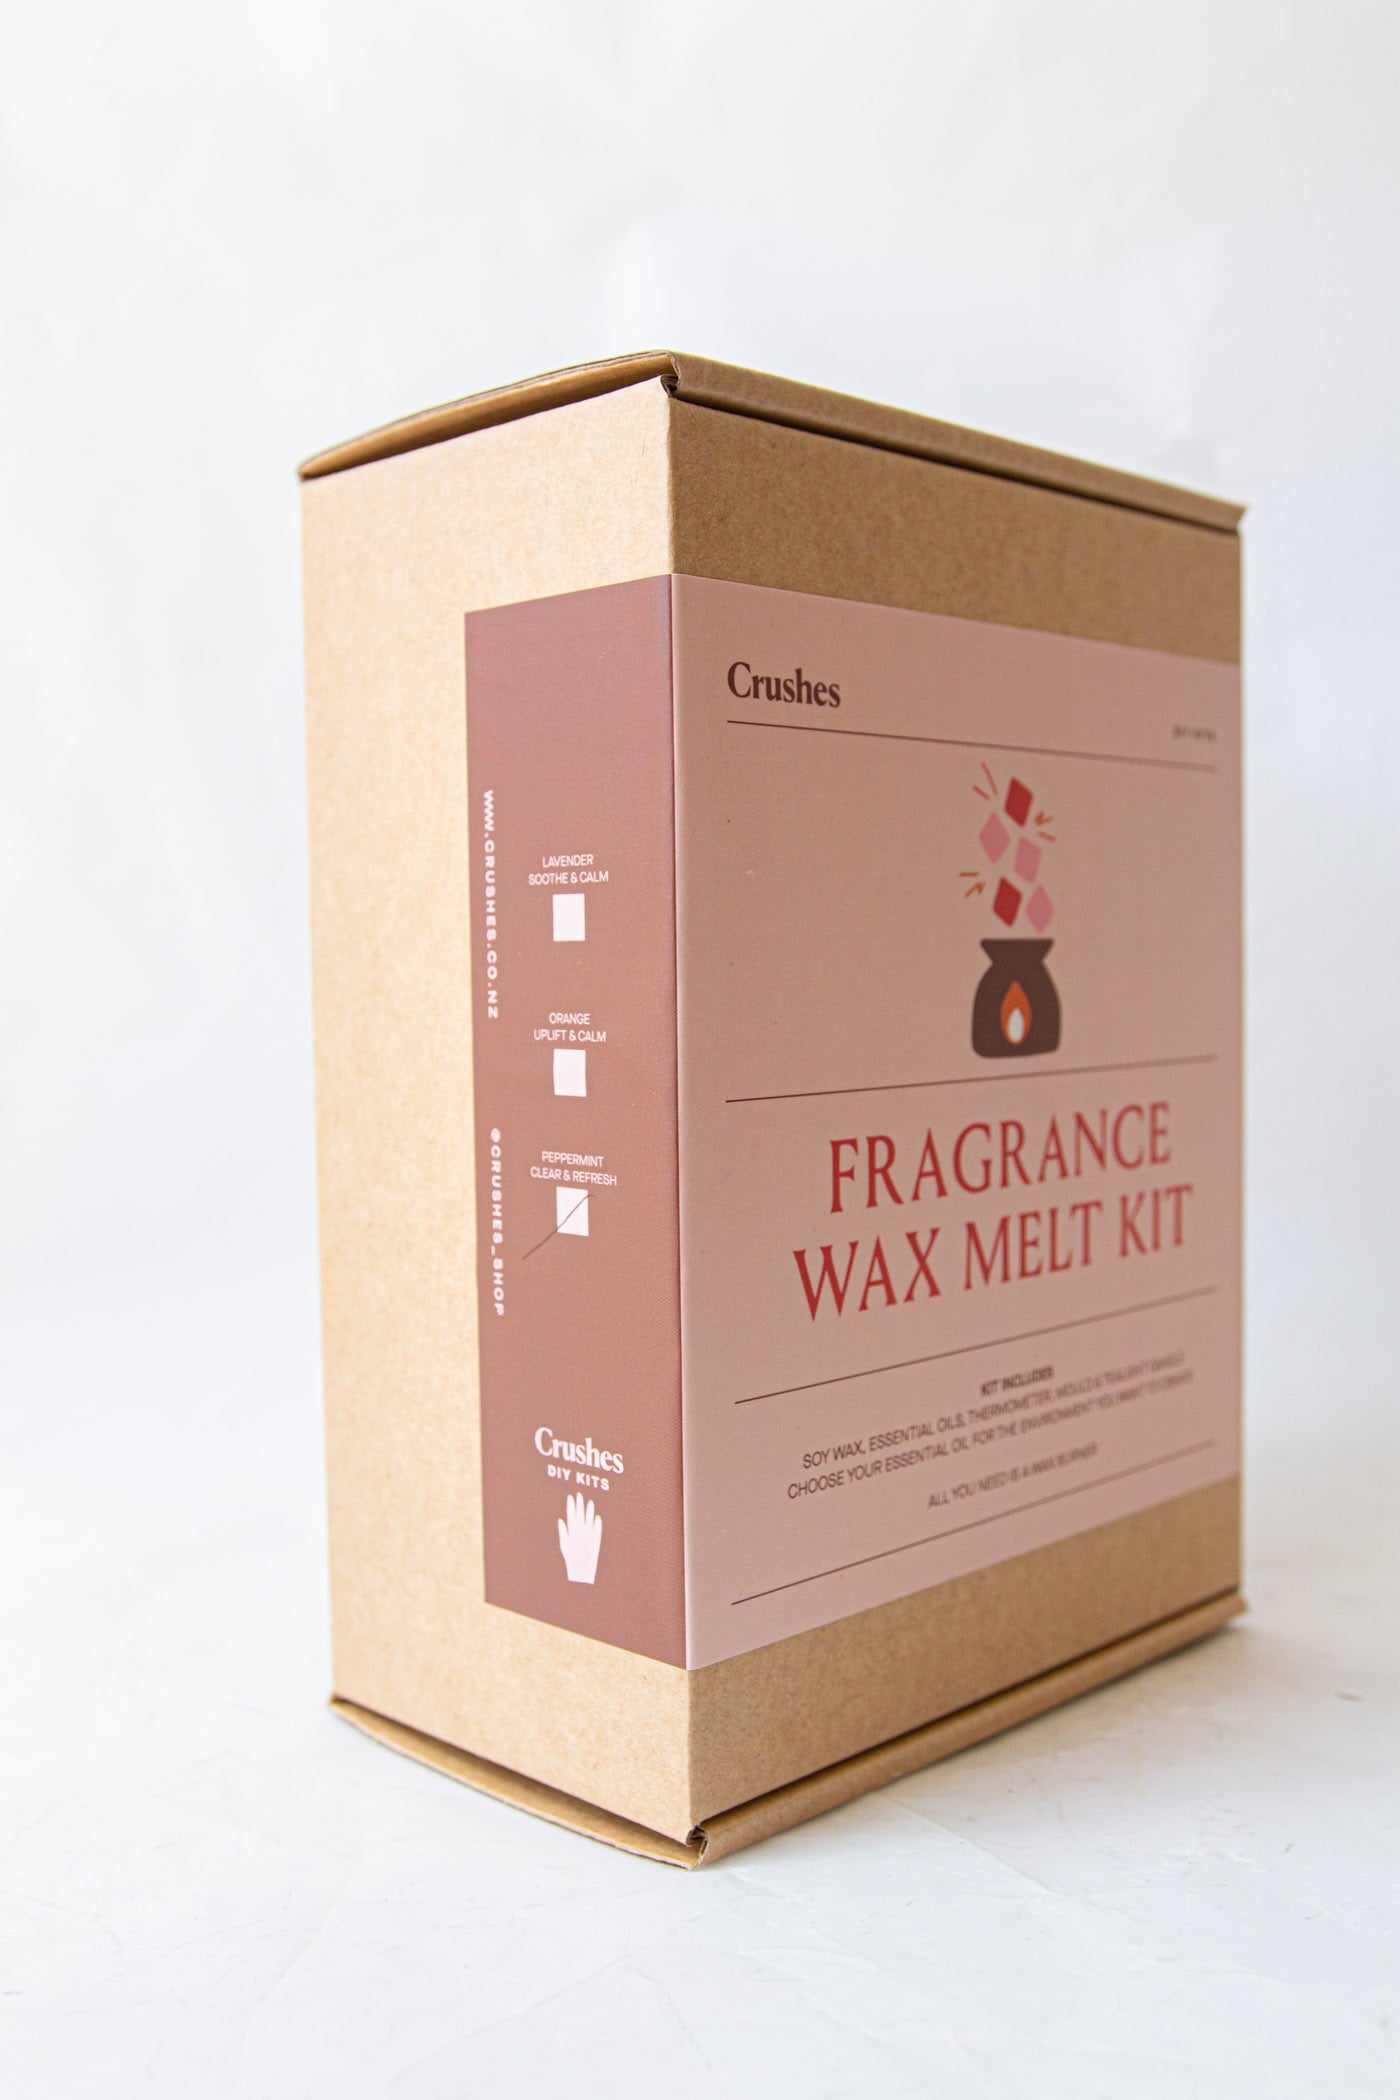 DIY Wax Melt Kit with Essential Oils